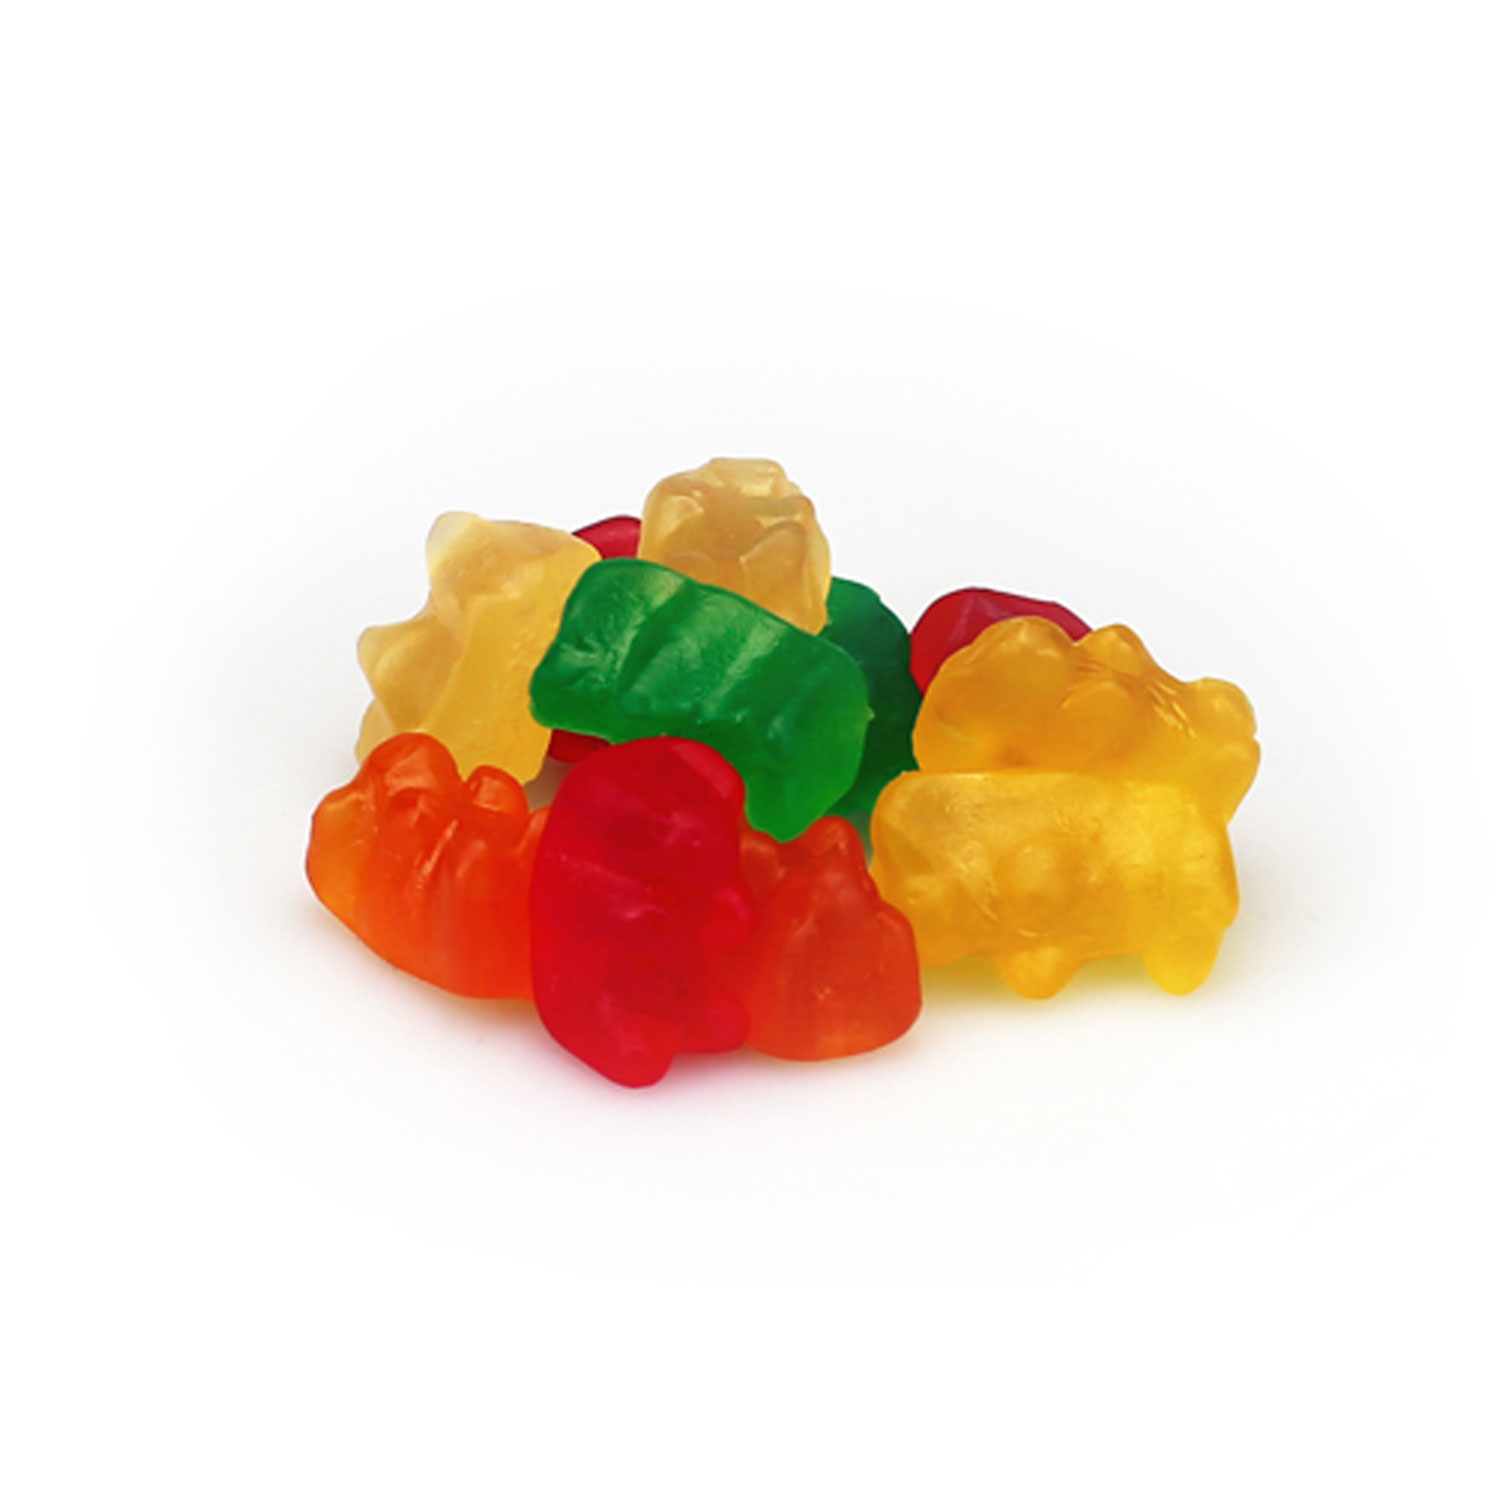 Can Hemp Gummy Bears Help You Stay Strong?